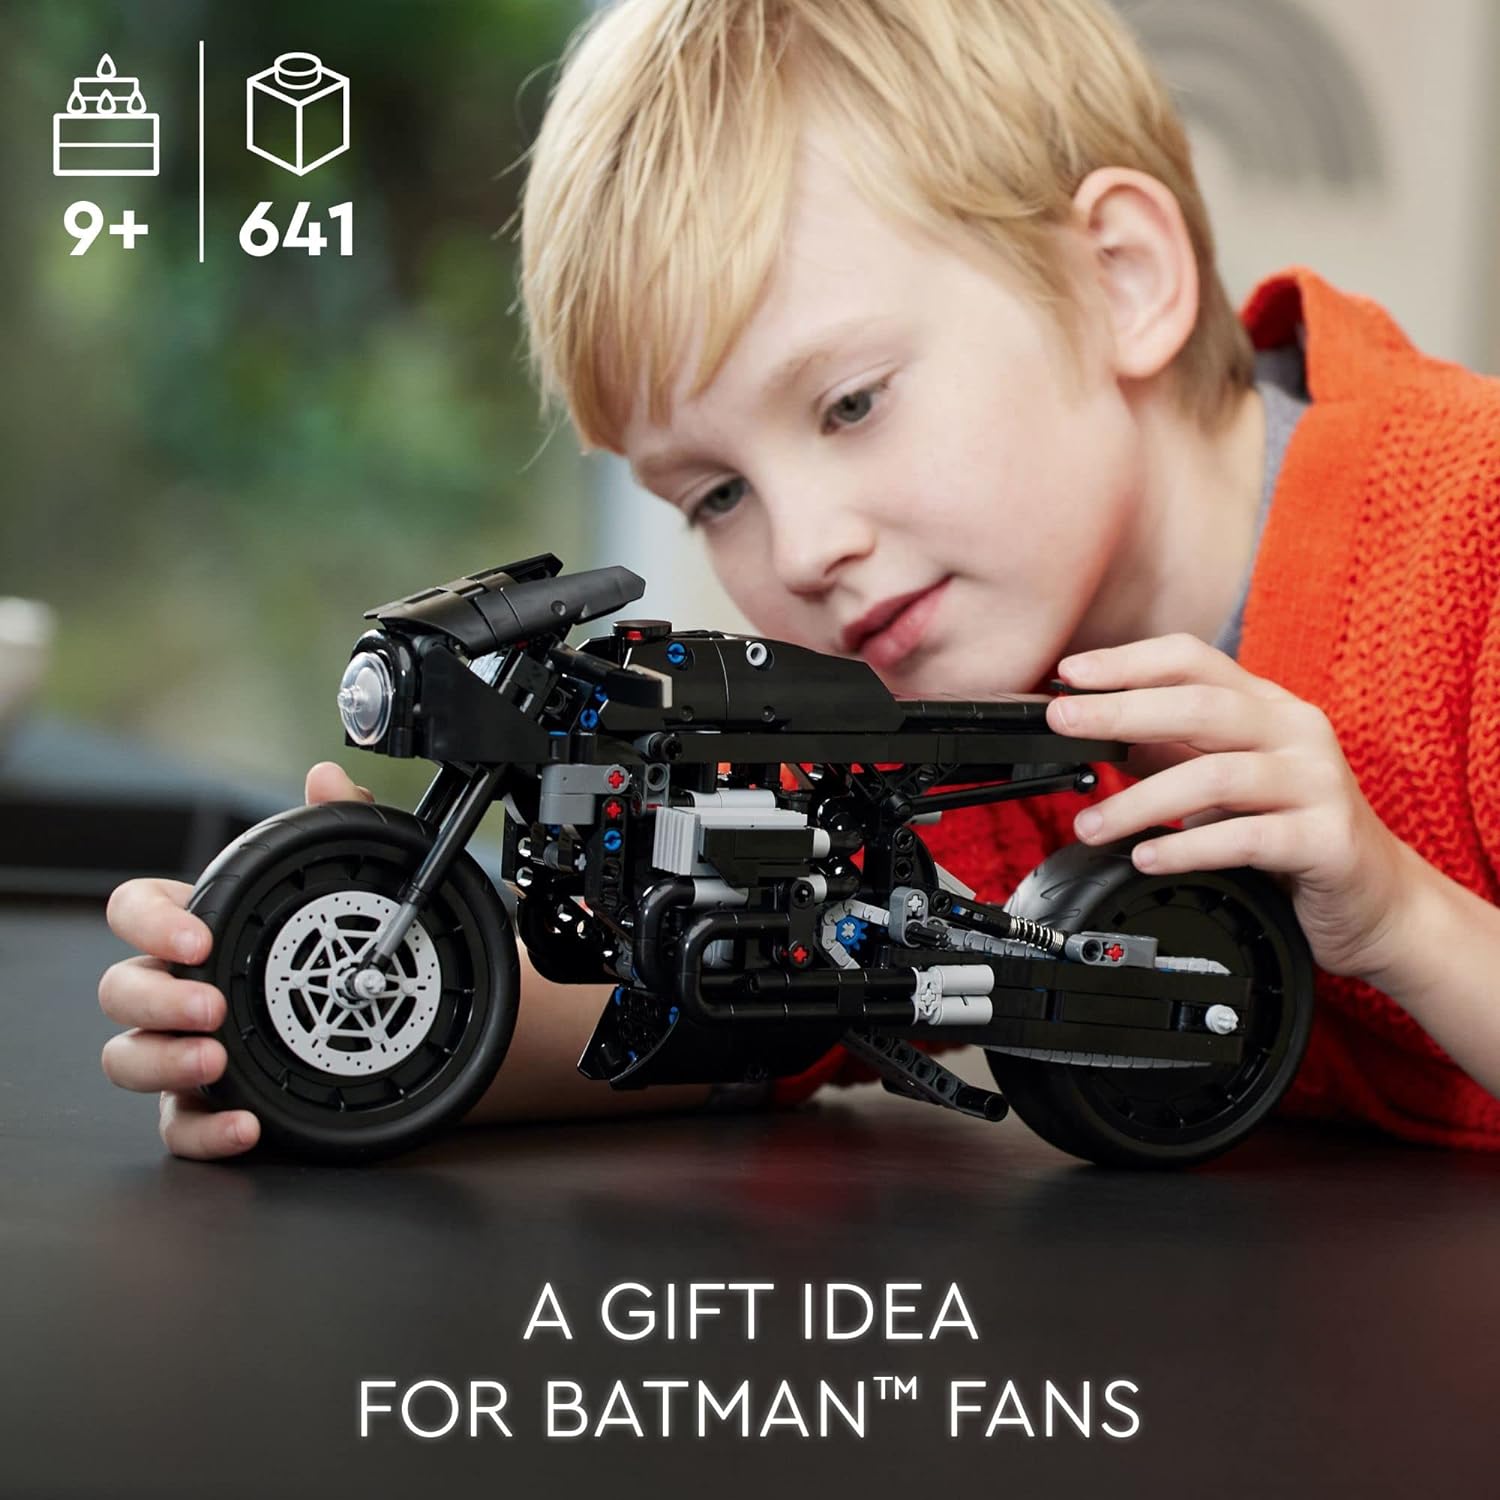 LEGO Technic The Batman Batcycle Building Kit for Ages 9+